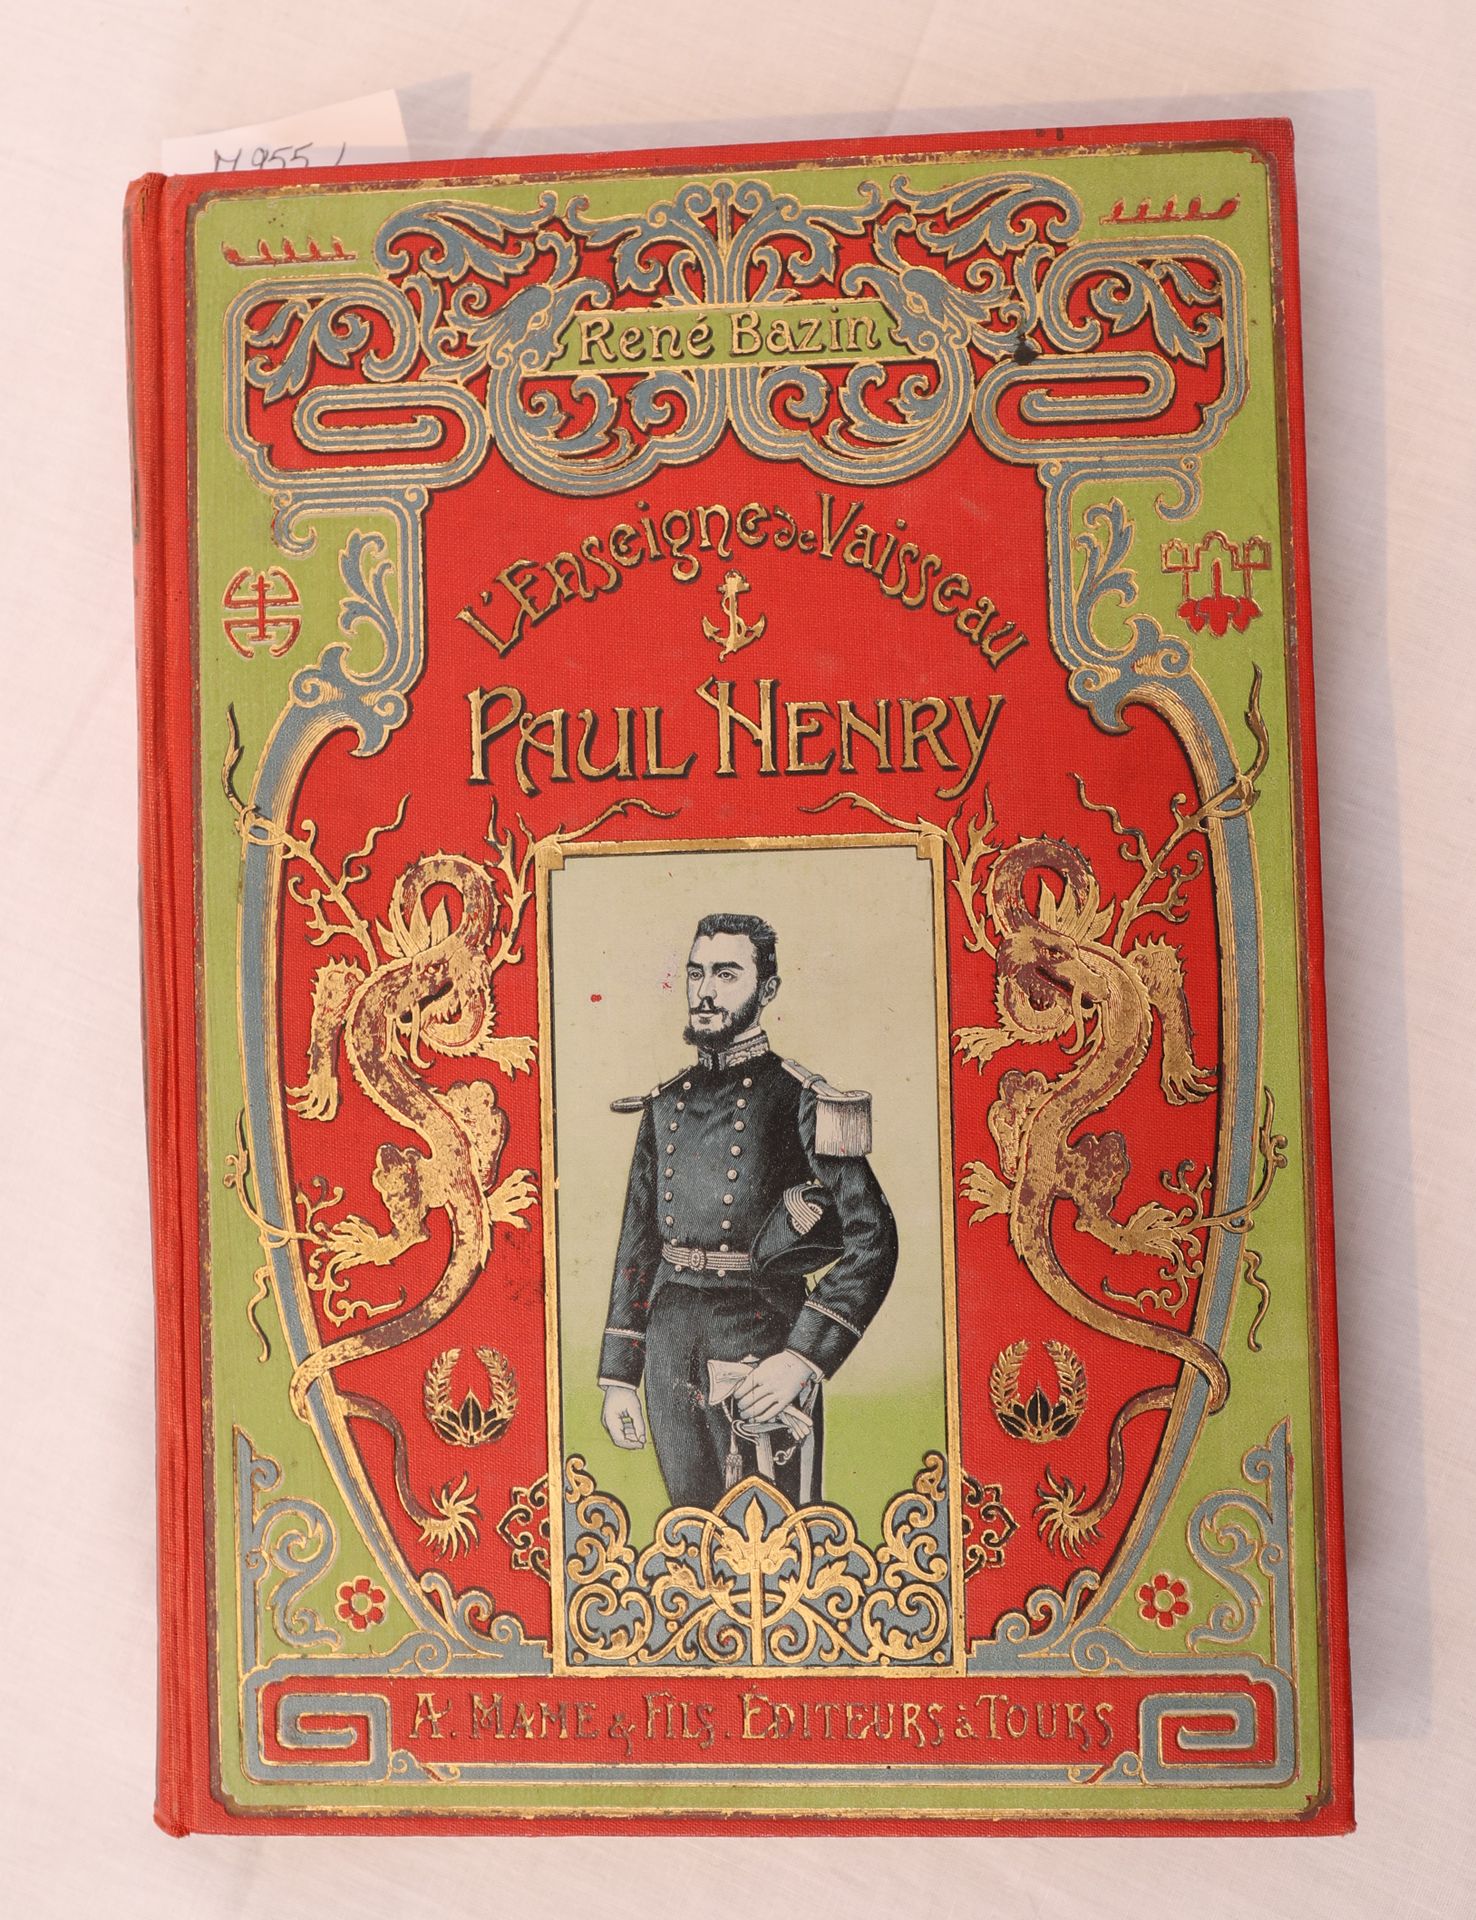 Null "PAUL HENRY'S WASTEWATER SIGN" von Henri BAZIN

Tours, Alfred Mame et Fils,&hellip;